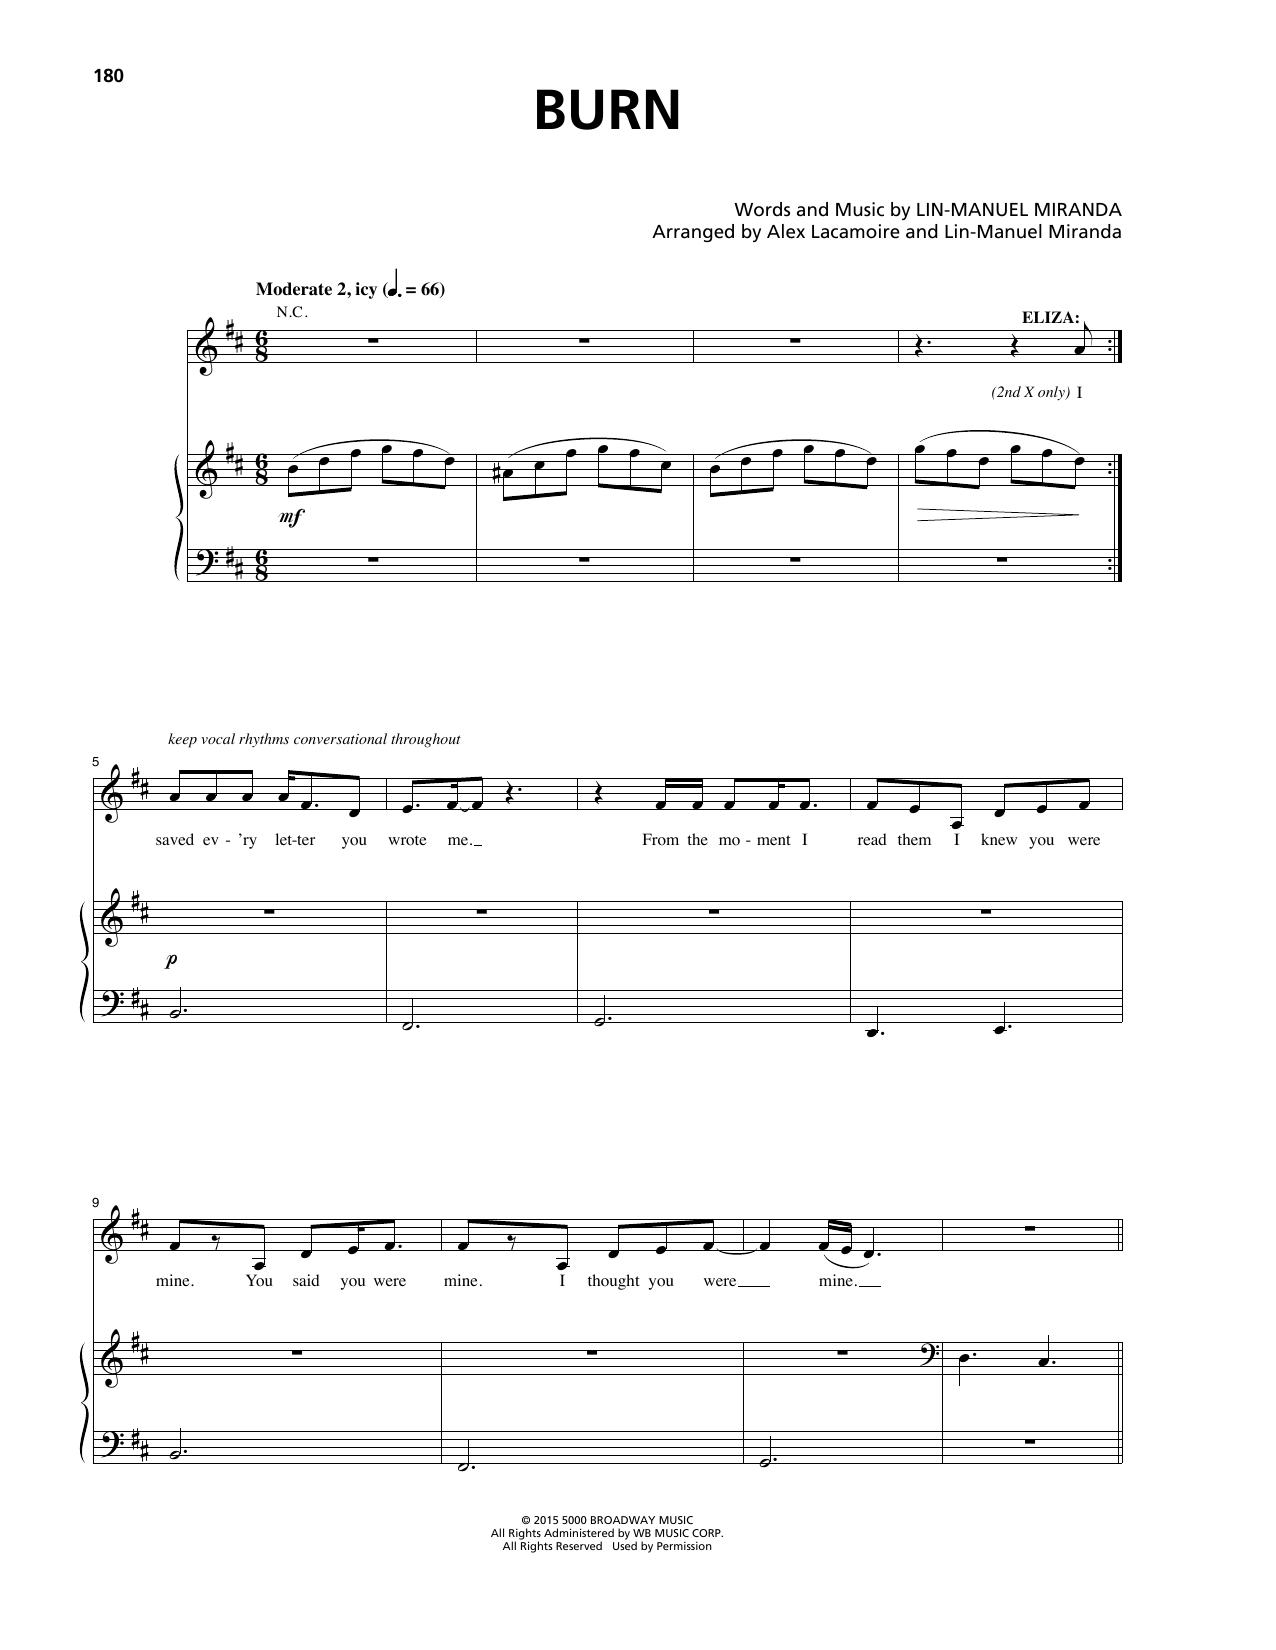 Download Lin-Manuel Miranda Burn Sheet Music and learn how to play Lyrics & Chords PDF digital score in minutes